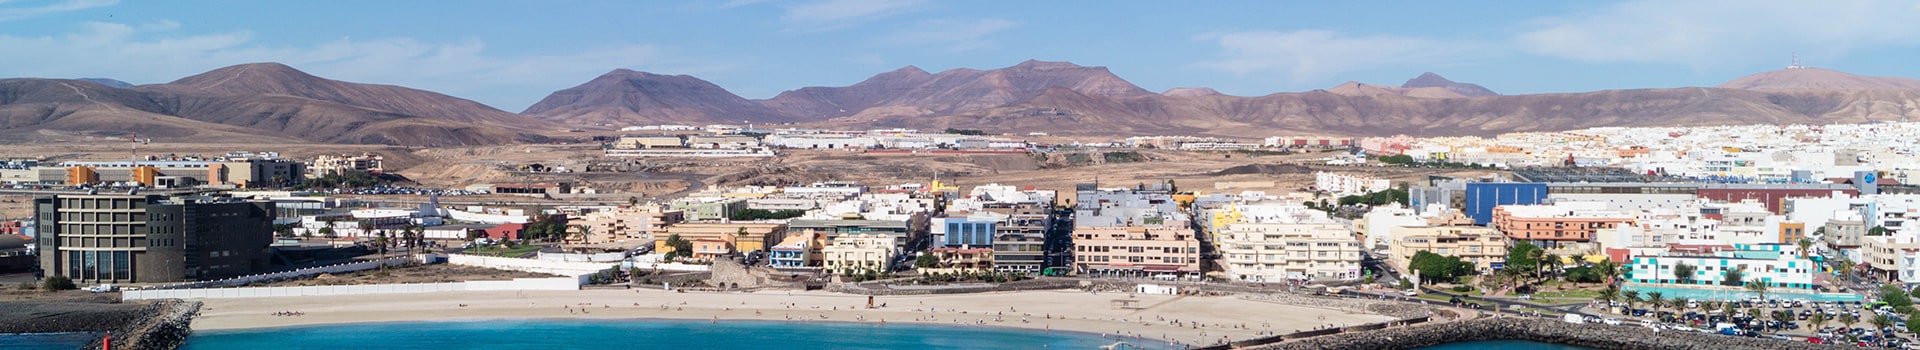 La Corogne - Fuerteventura